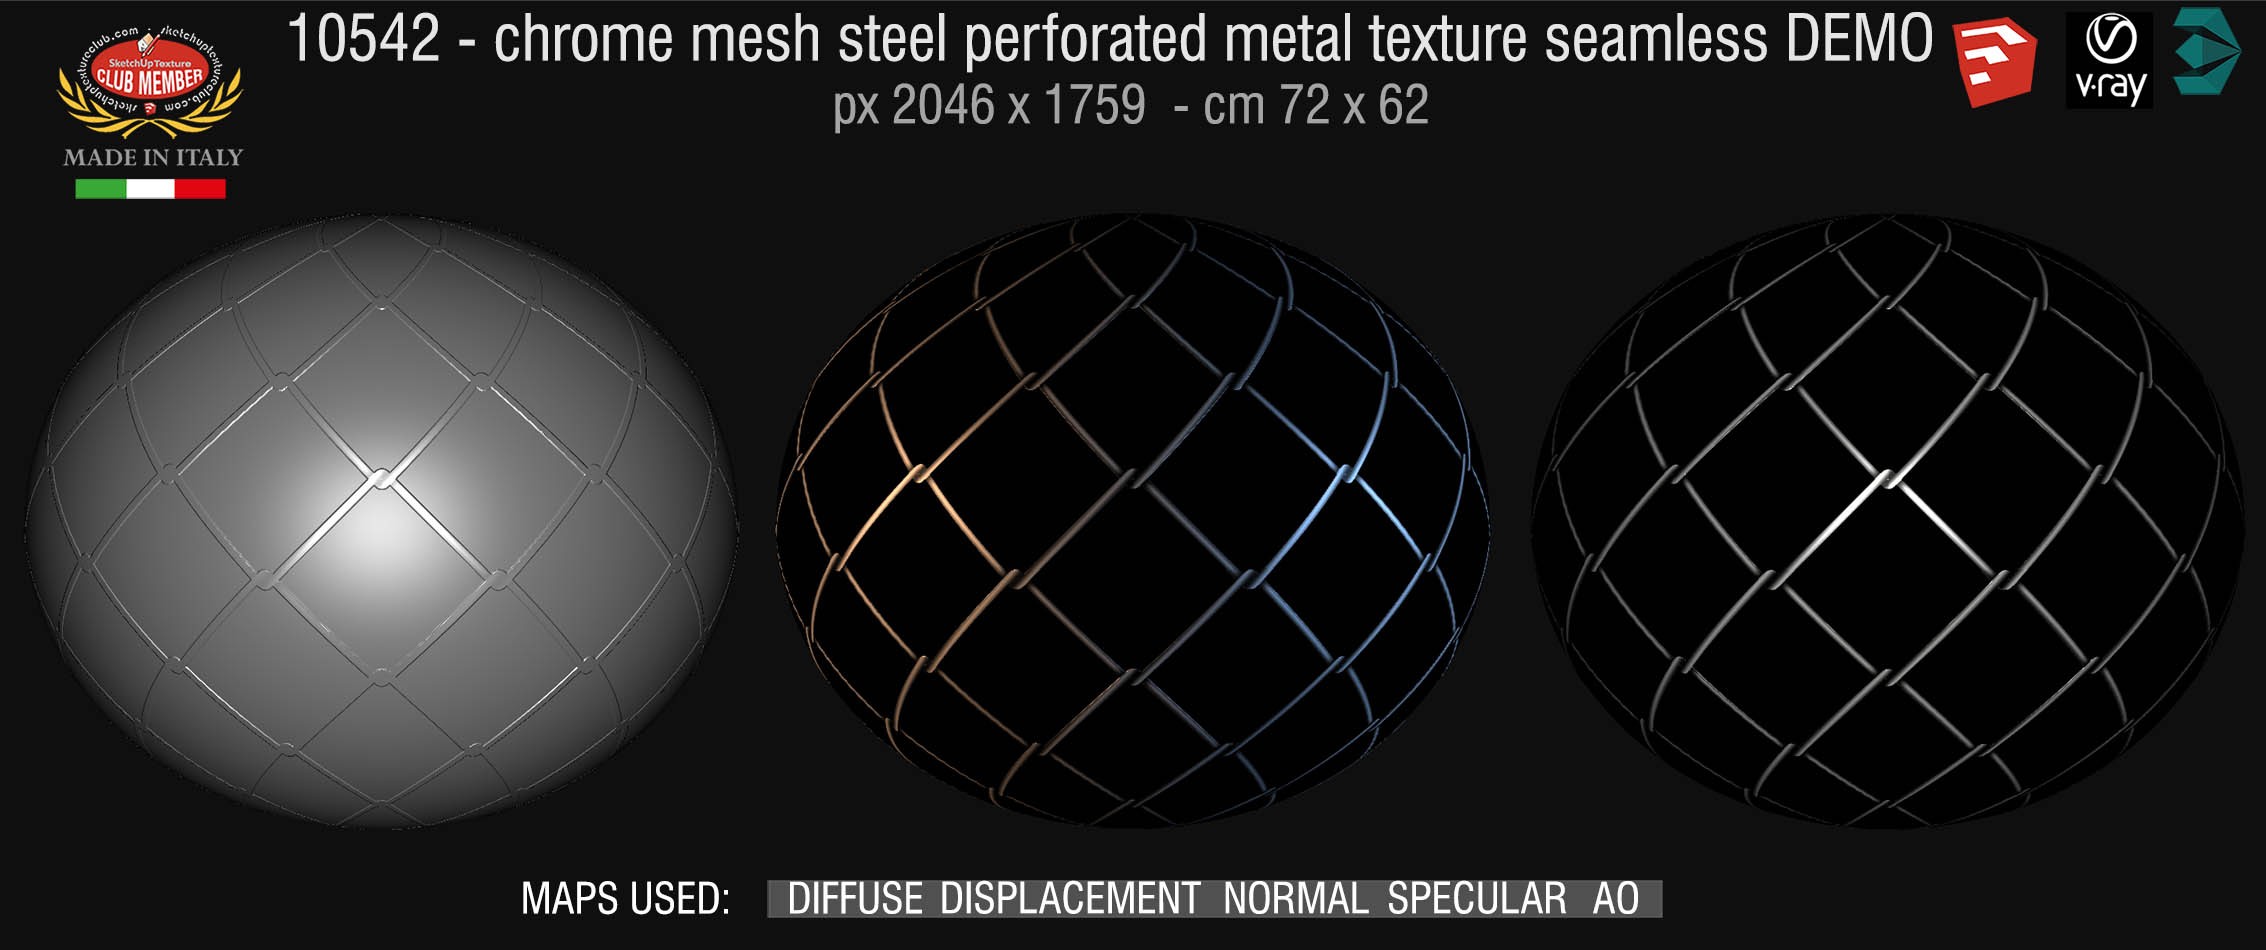 10542 HR Chrome mesh steel perforate metal texture seamless + maps DEMO